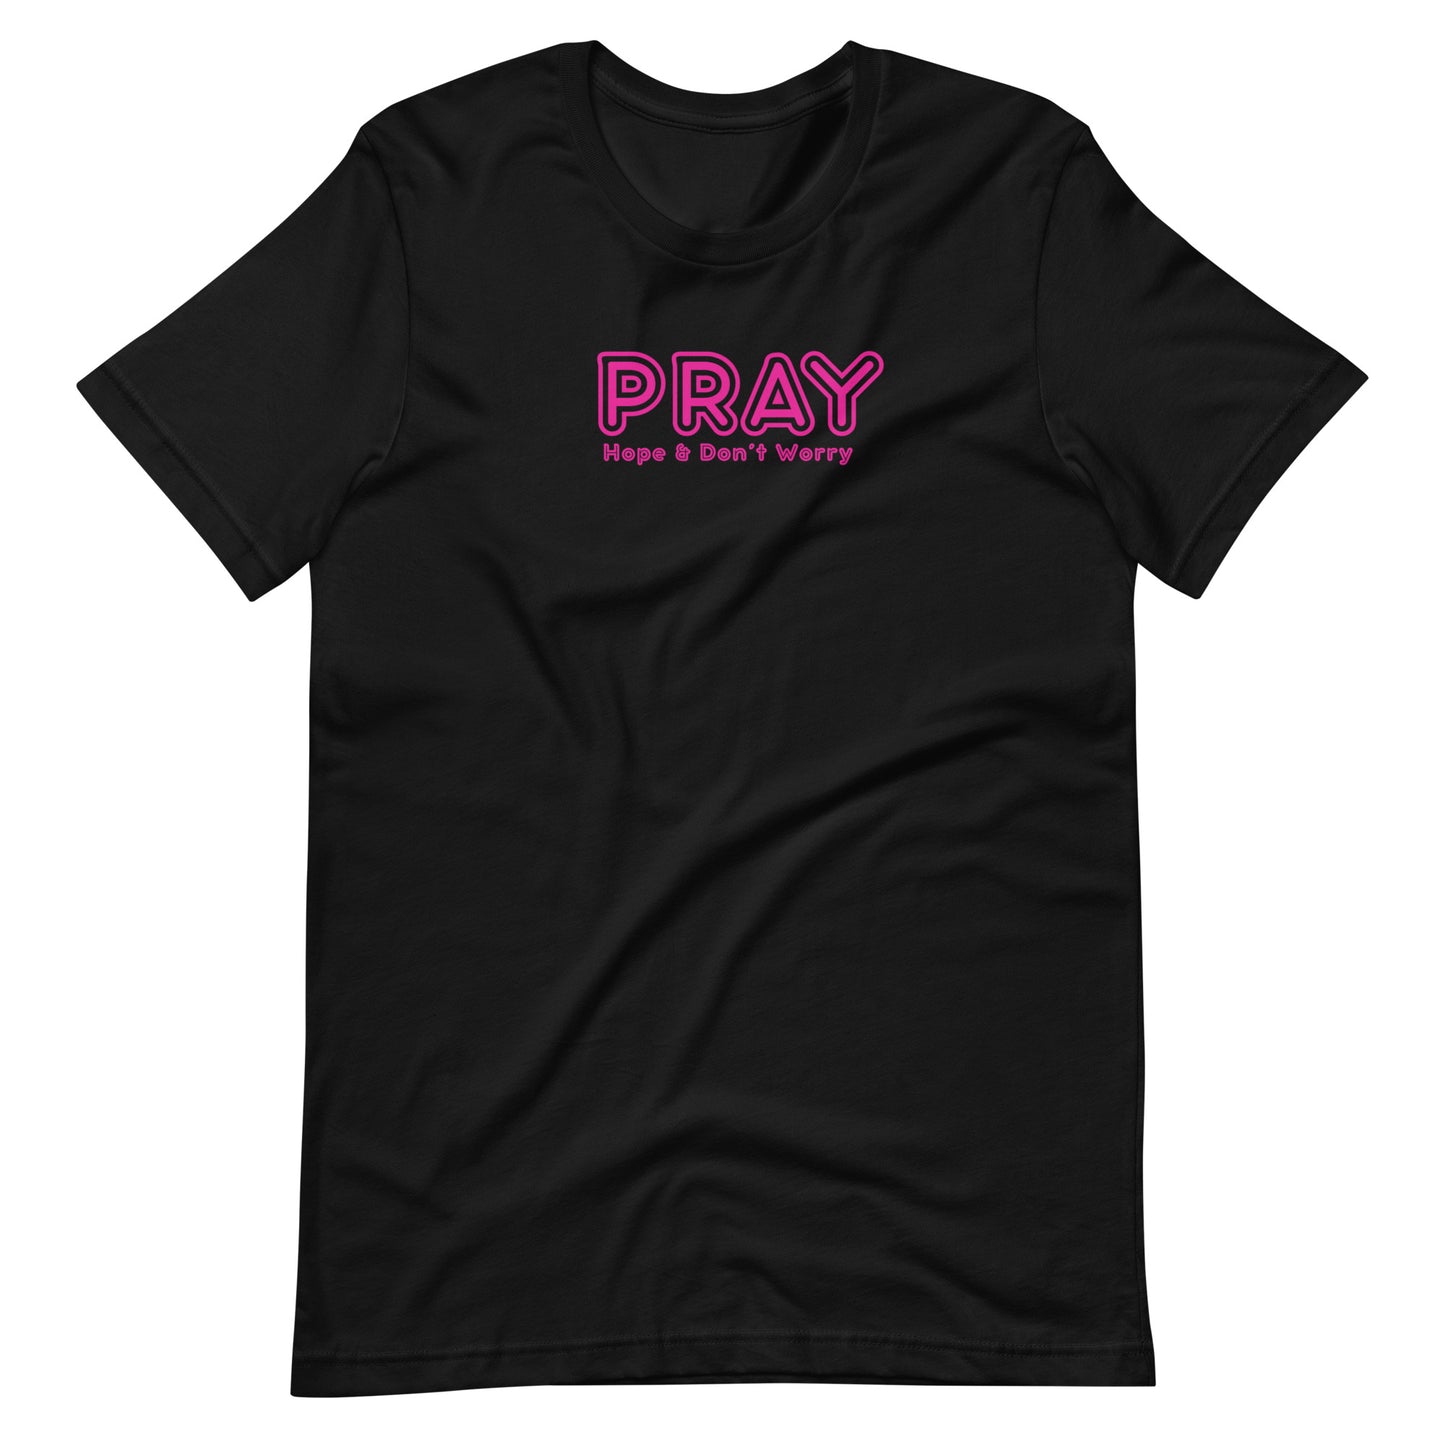 Pray Hope and Don't worry black tshirt